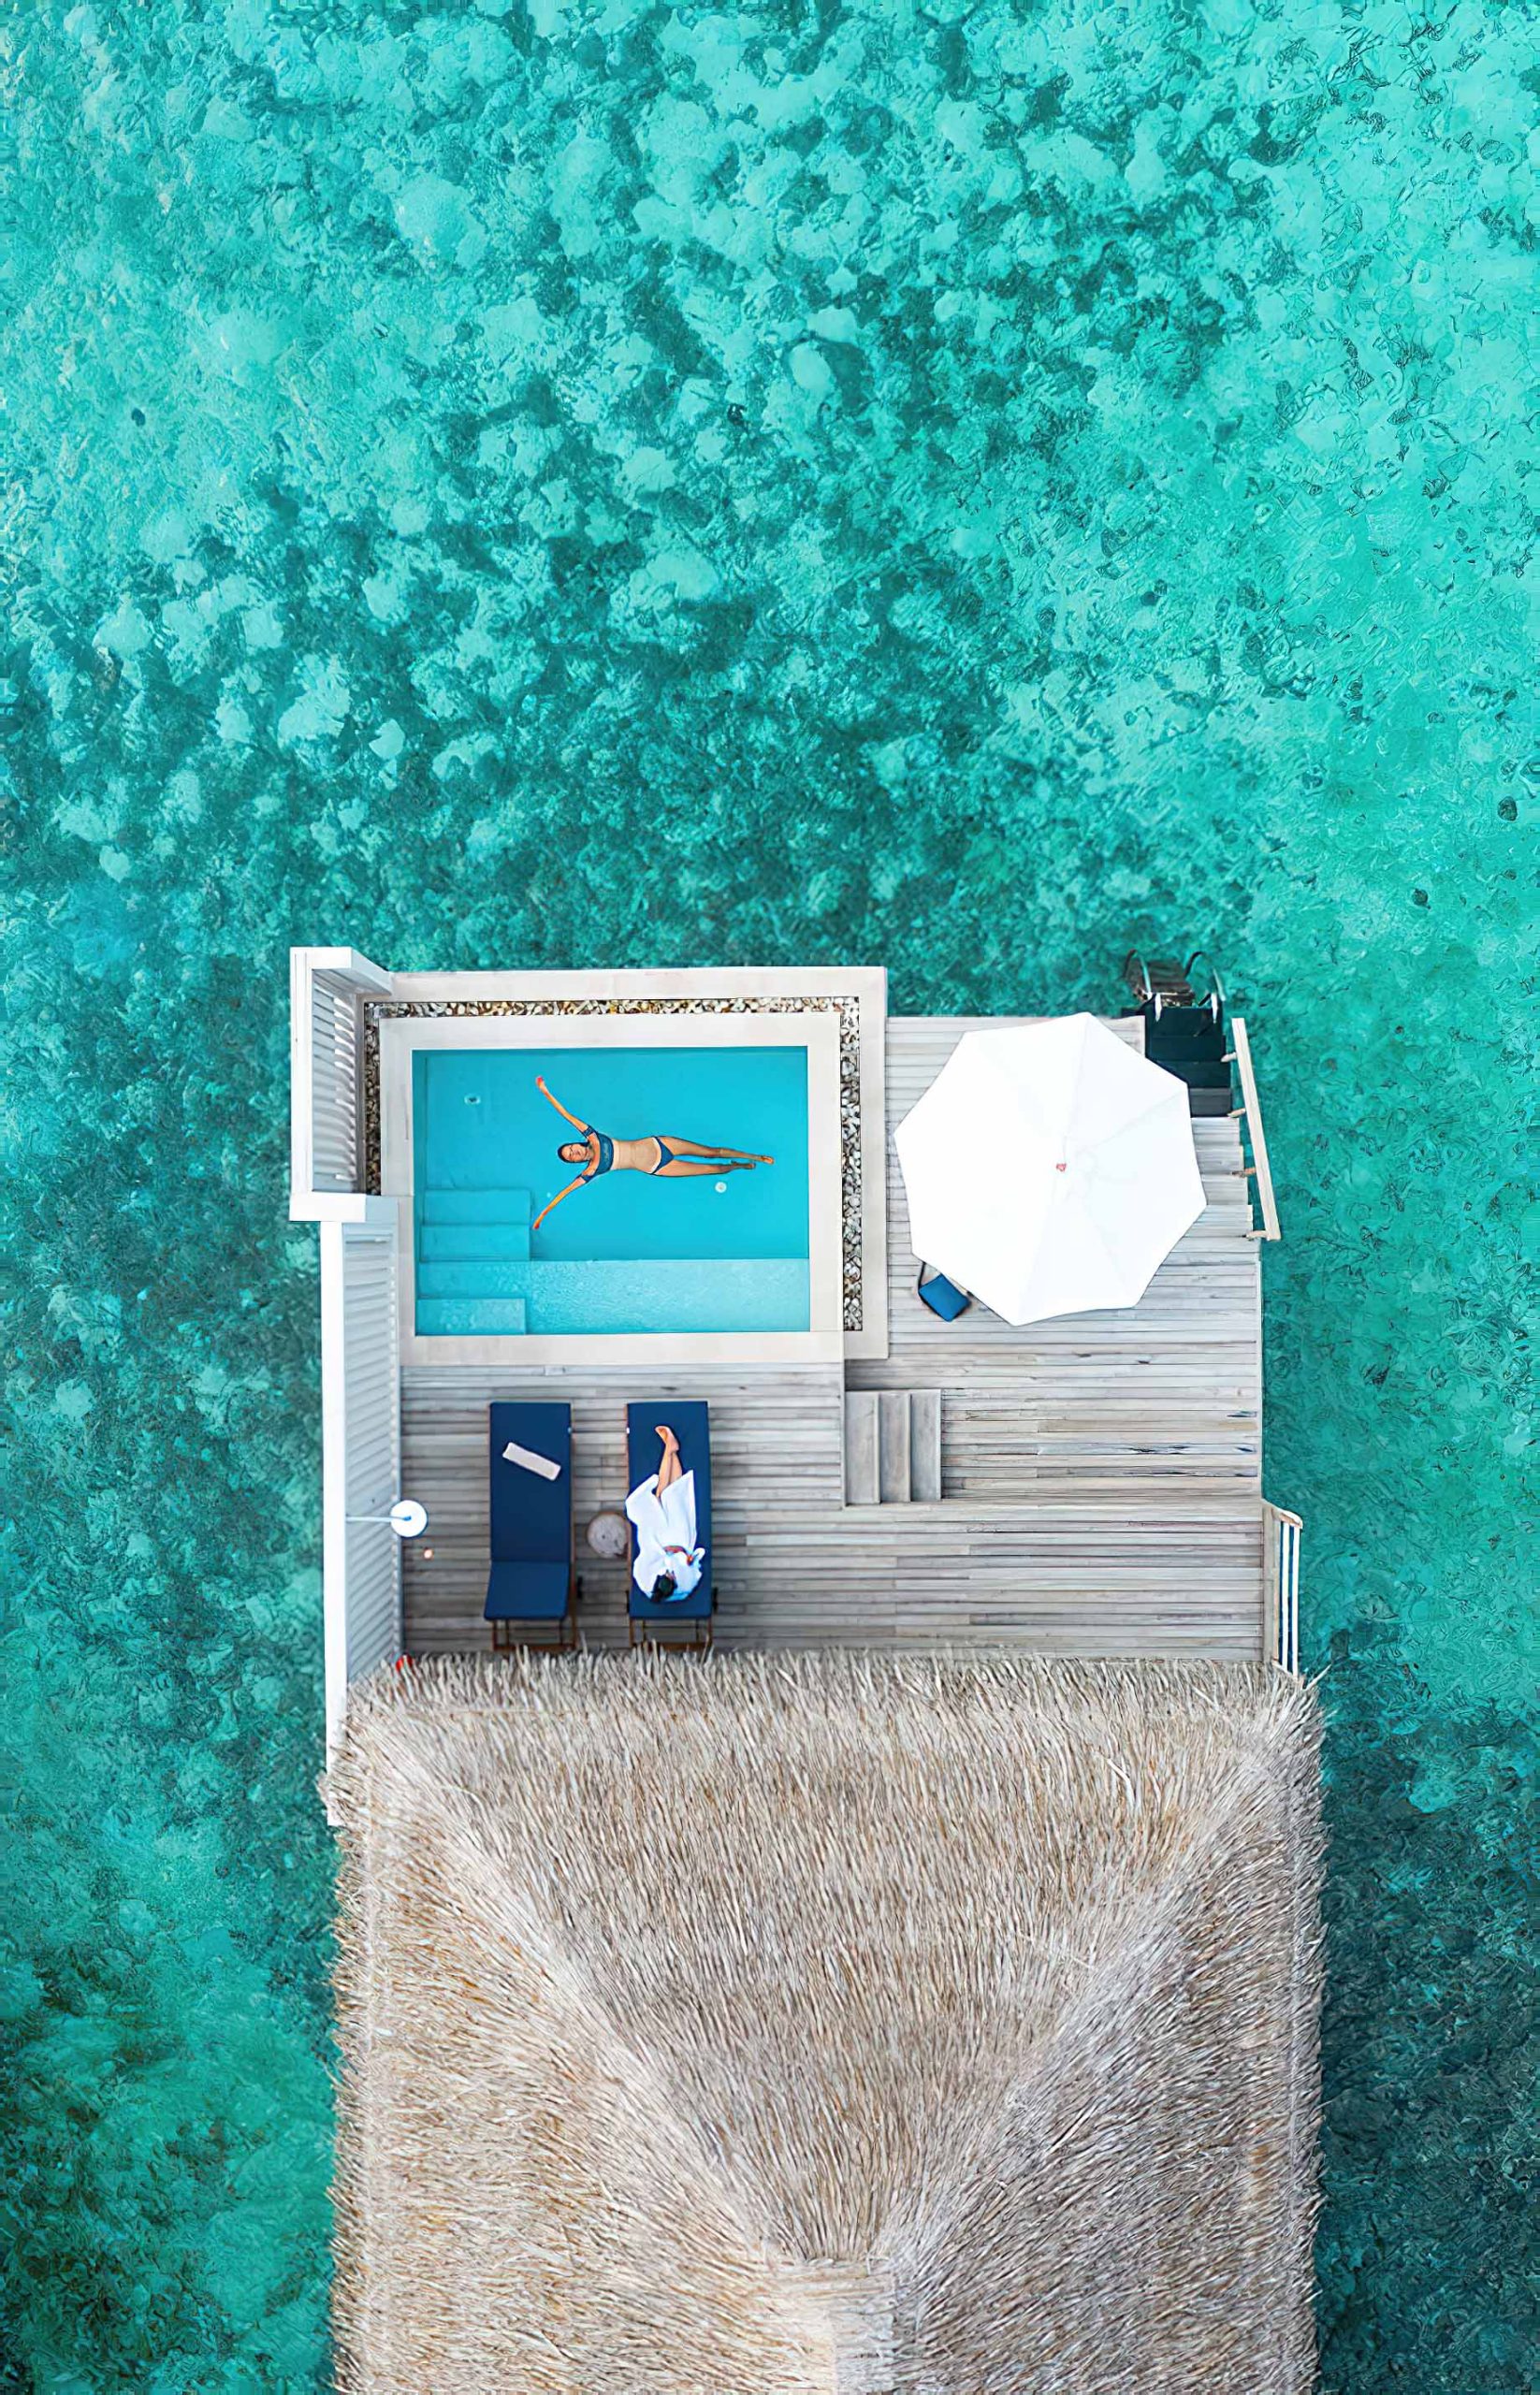 Baglioni Resort Maldives - Maagau Island, Rinbudhoo, Maldives - Pool Water Villa Overhead Aerial View